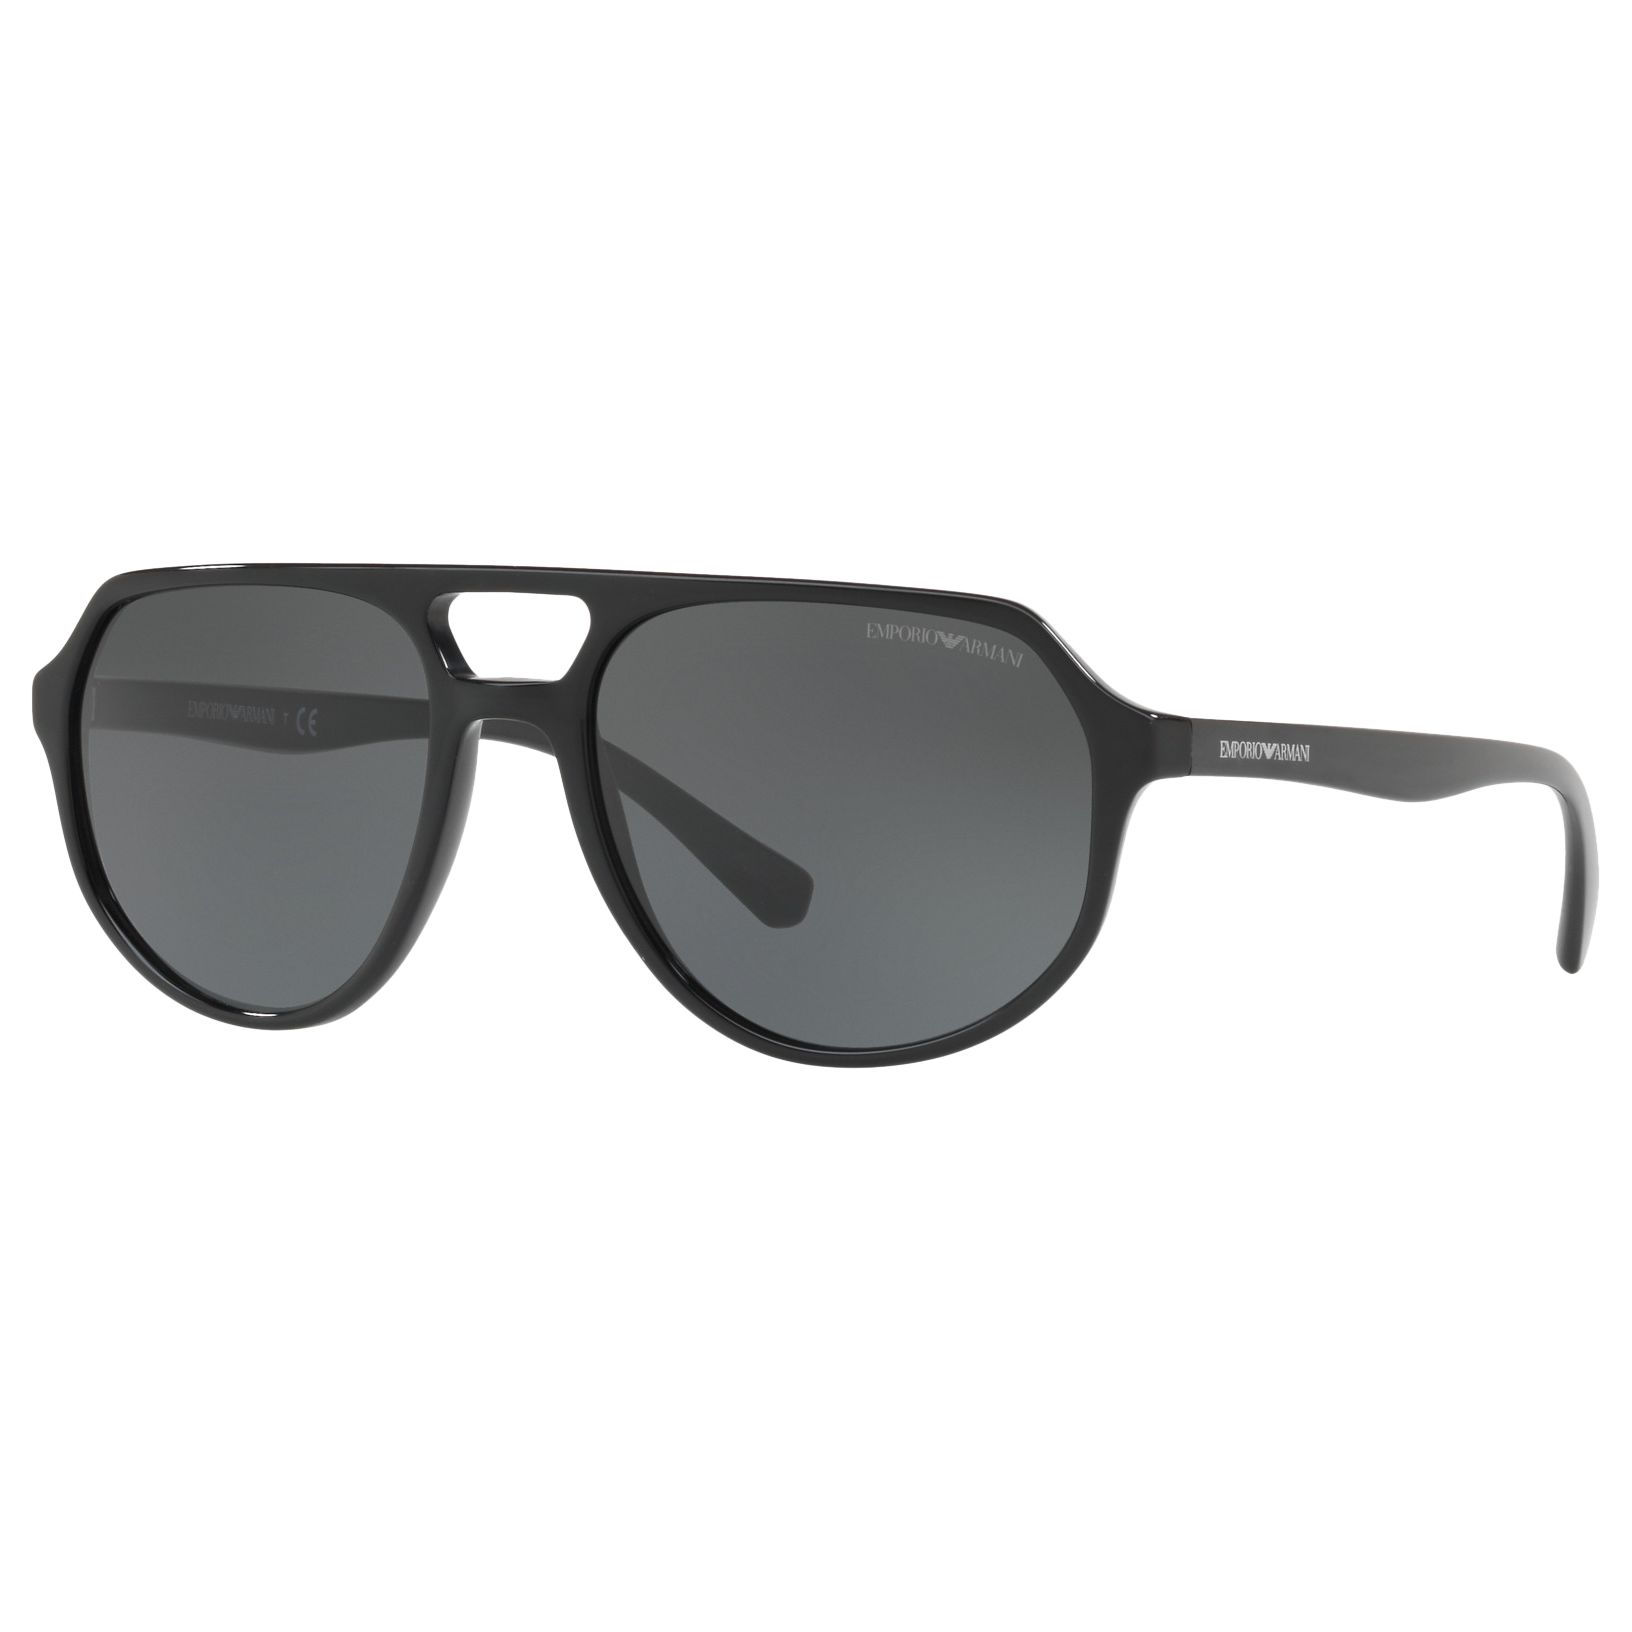 EA4111 Aviator Sunglasses, Black/Grey 